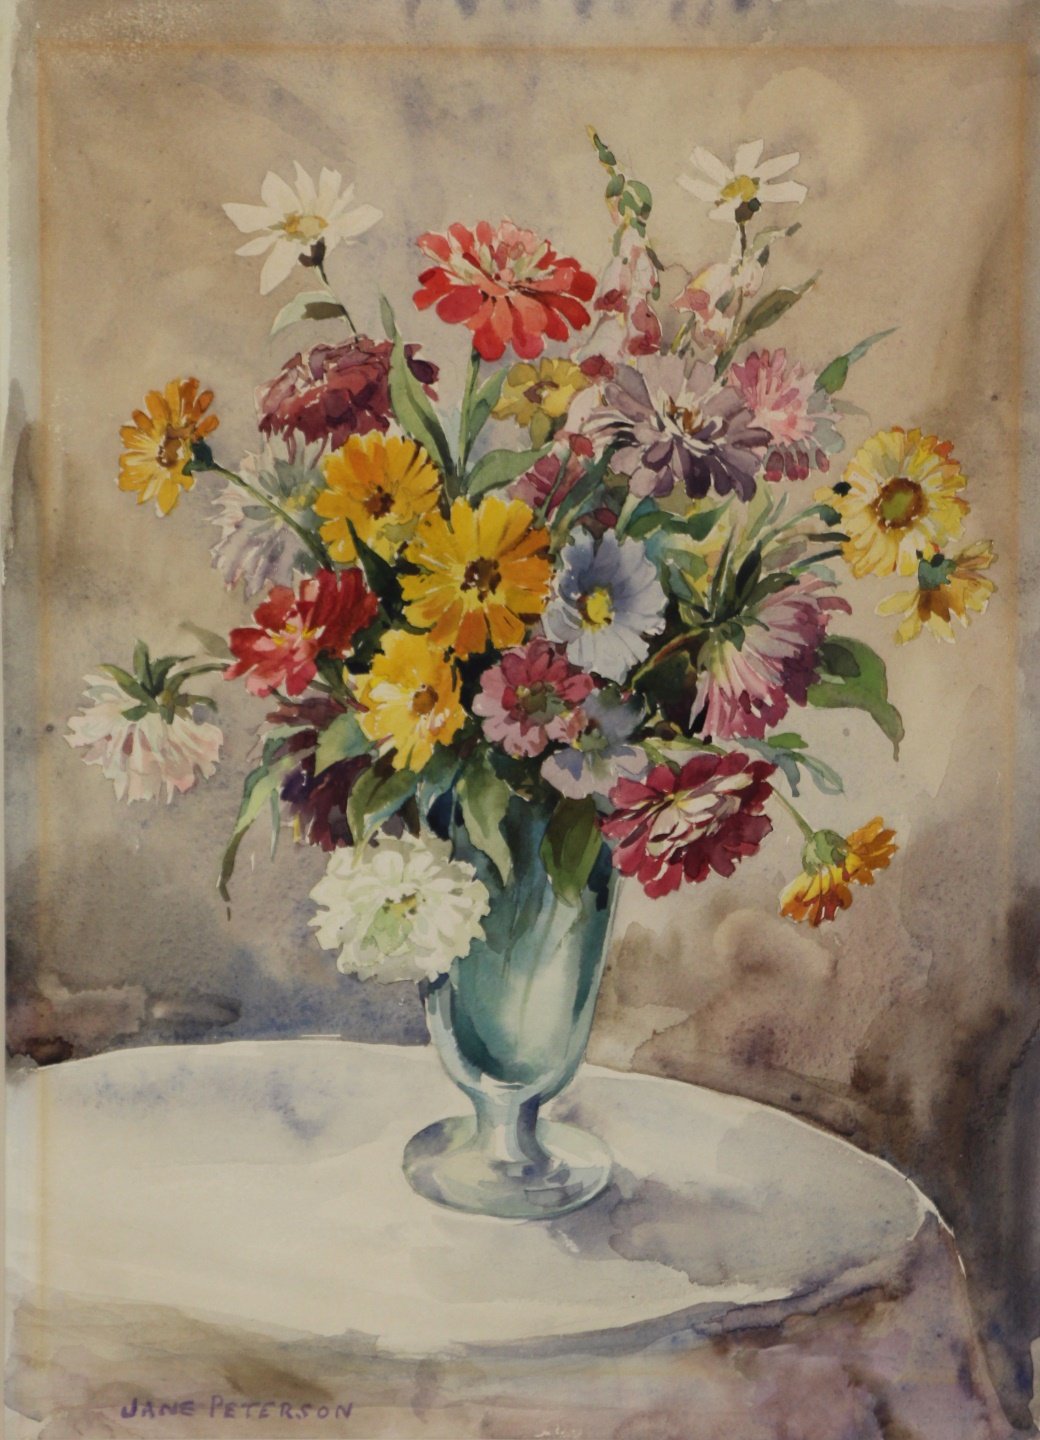 JANE PETERSON (ATTR.) Watercolor.